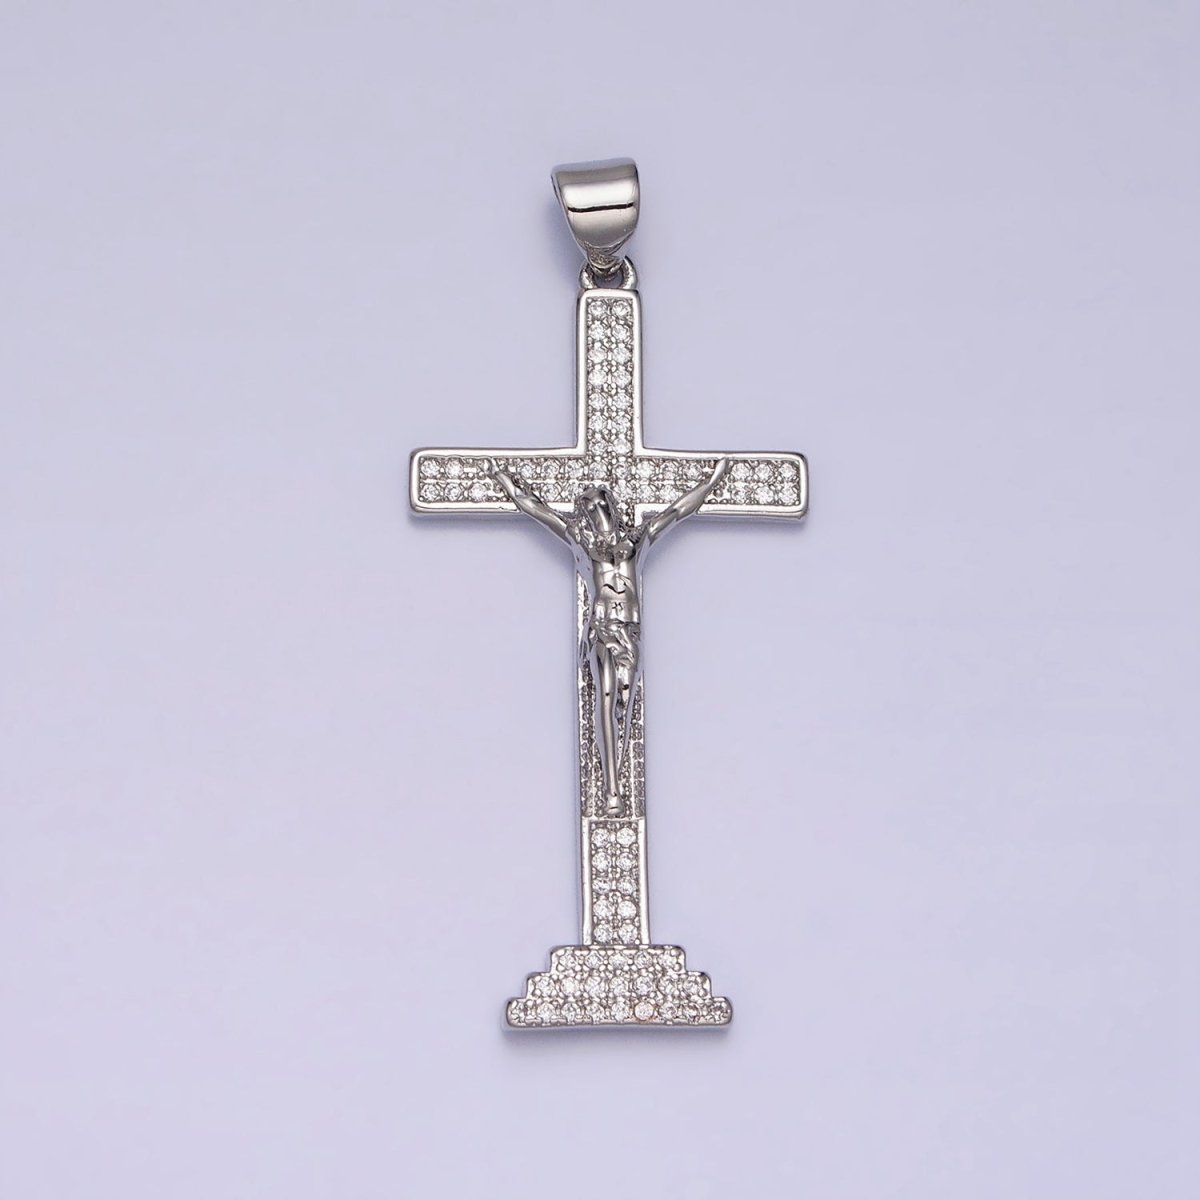 24K Gold Filled Cross Pendant | Jesus Crucifix Pendant | Religious Cross Charm Necklace AA252 AA253 - DLUXCA